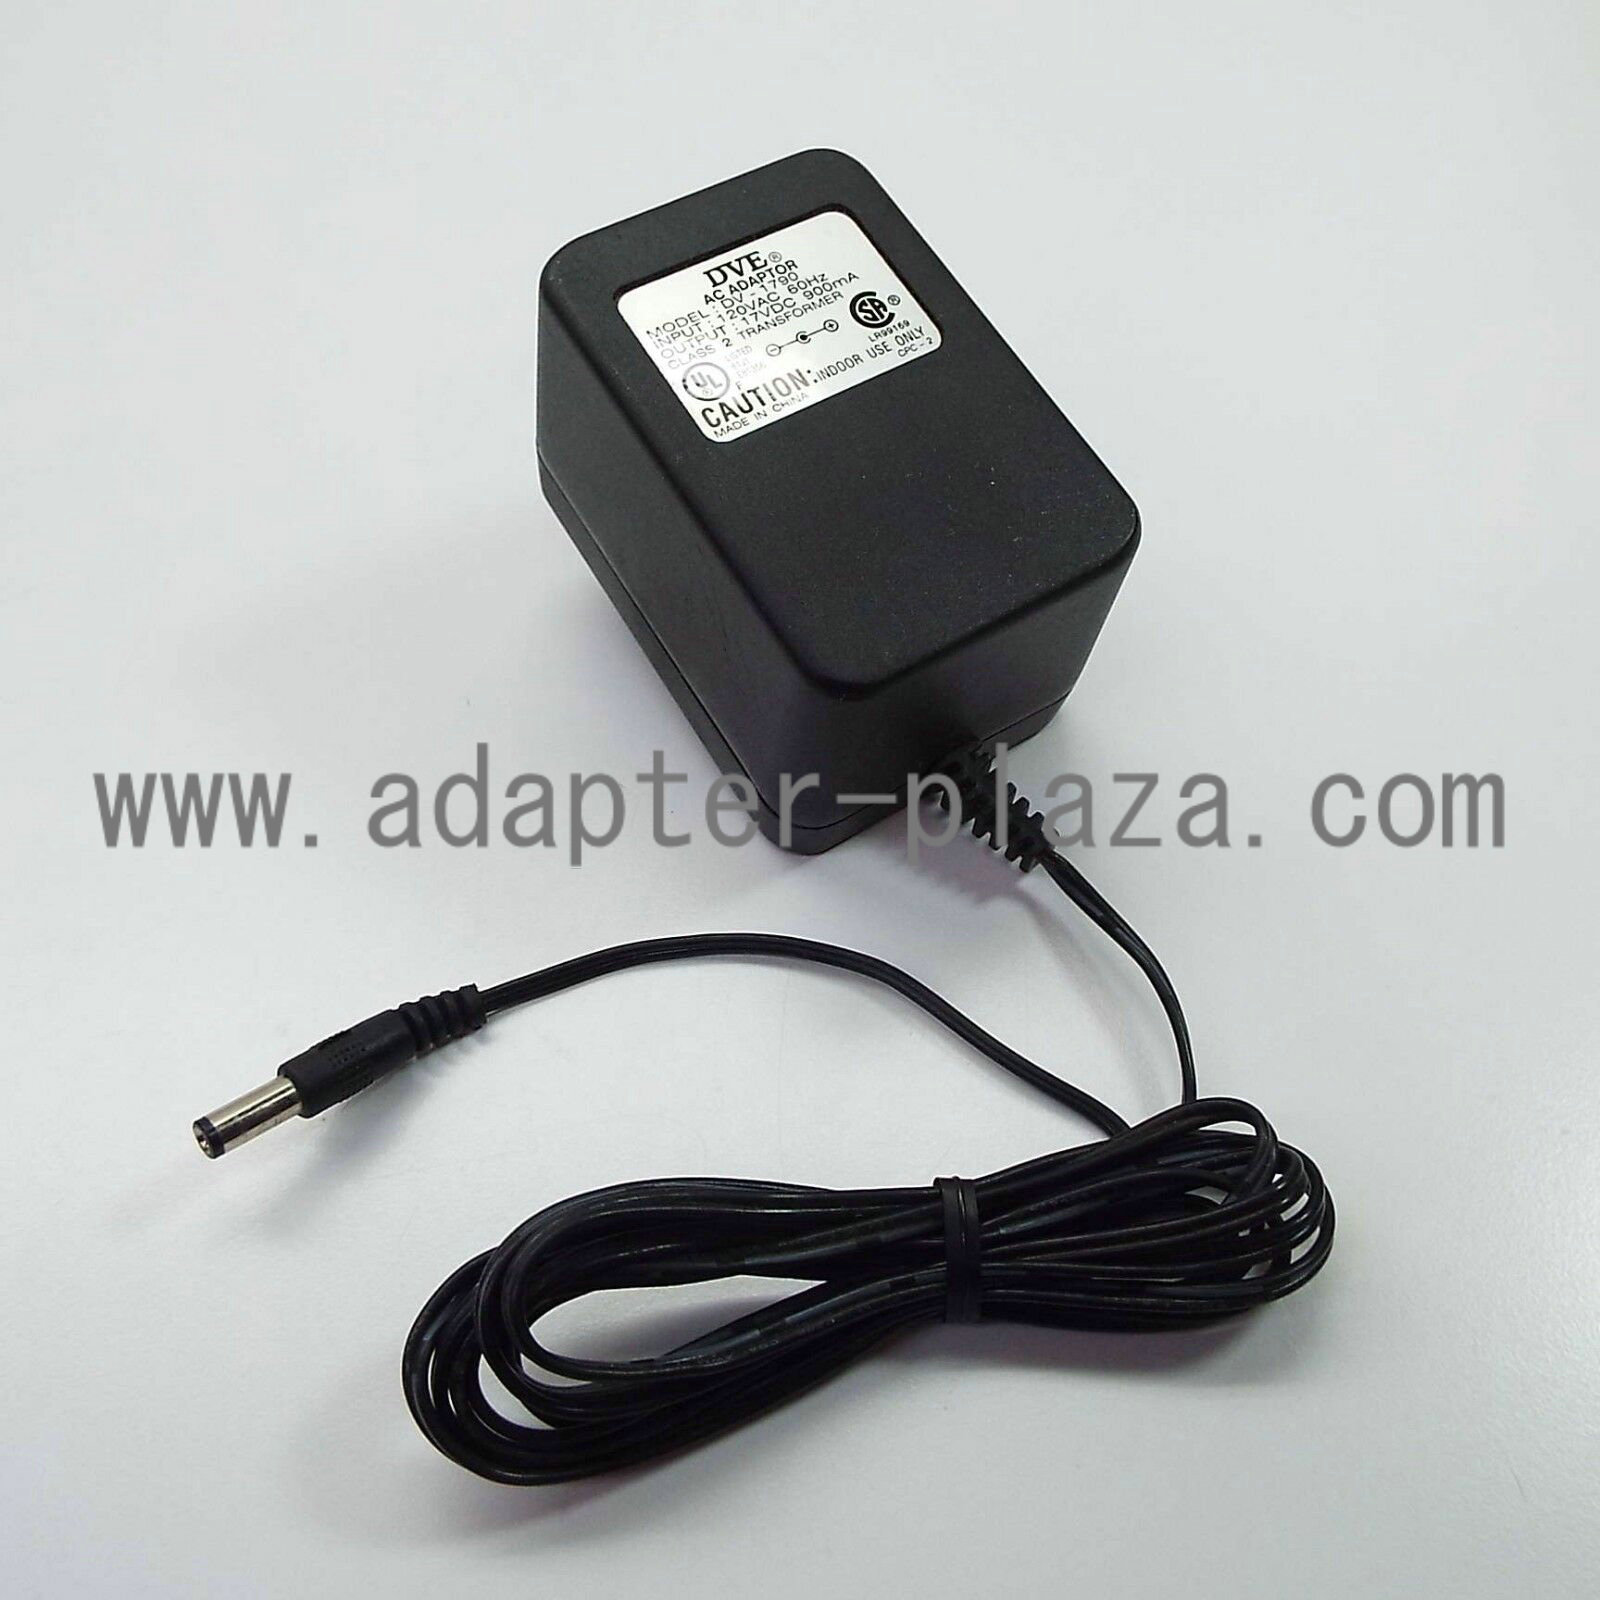 *Brand NEW*DVE DV-1790 17VDC 900MA AC DC Adapter POWER SUPPLY